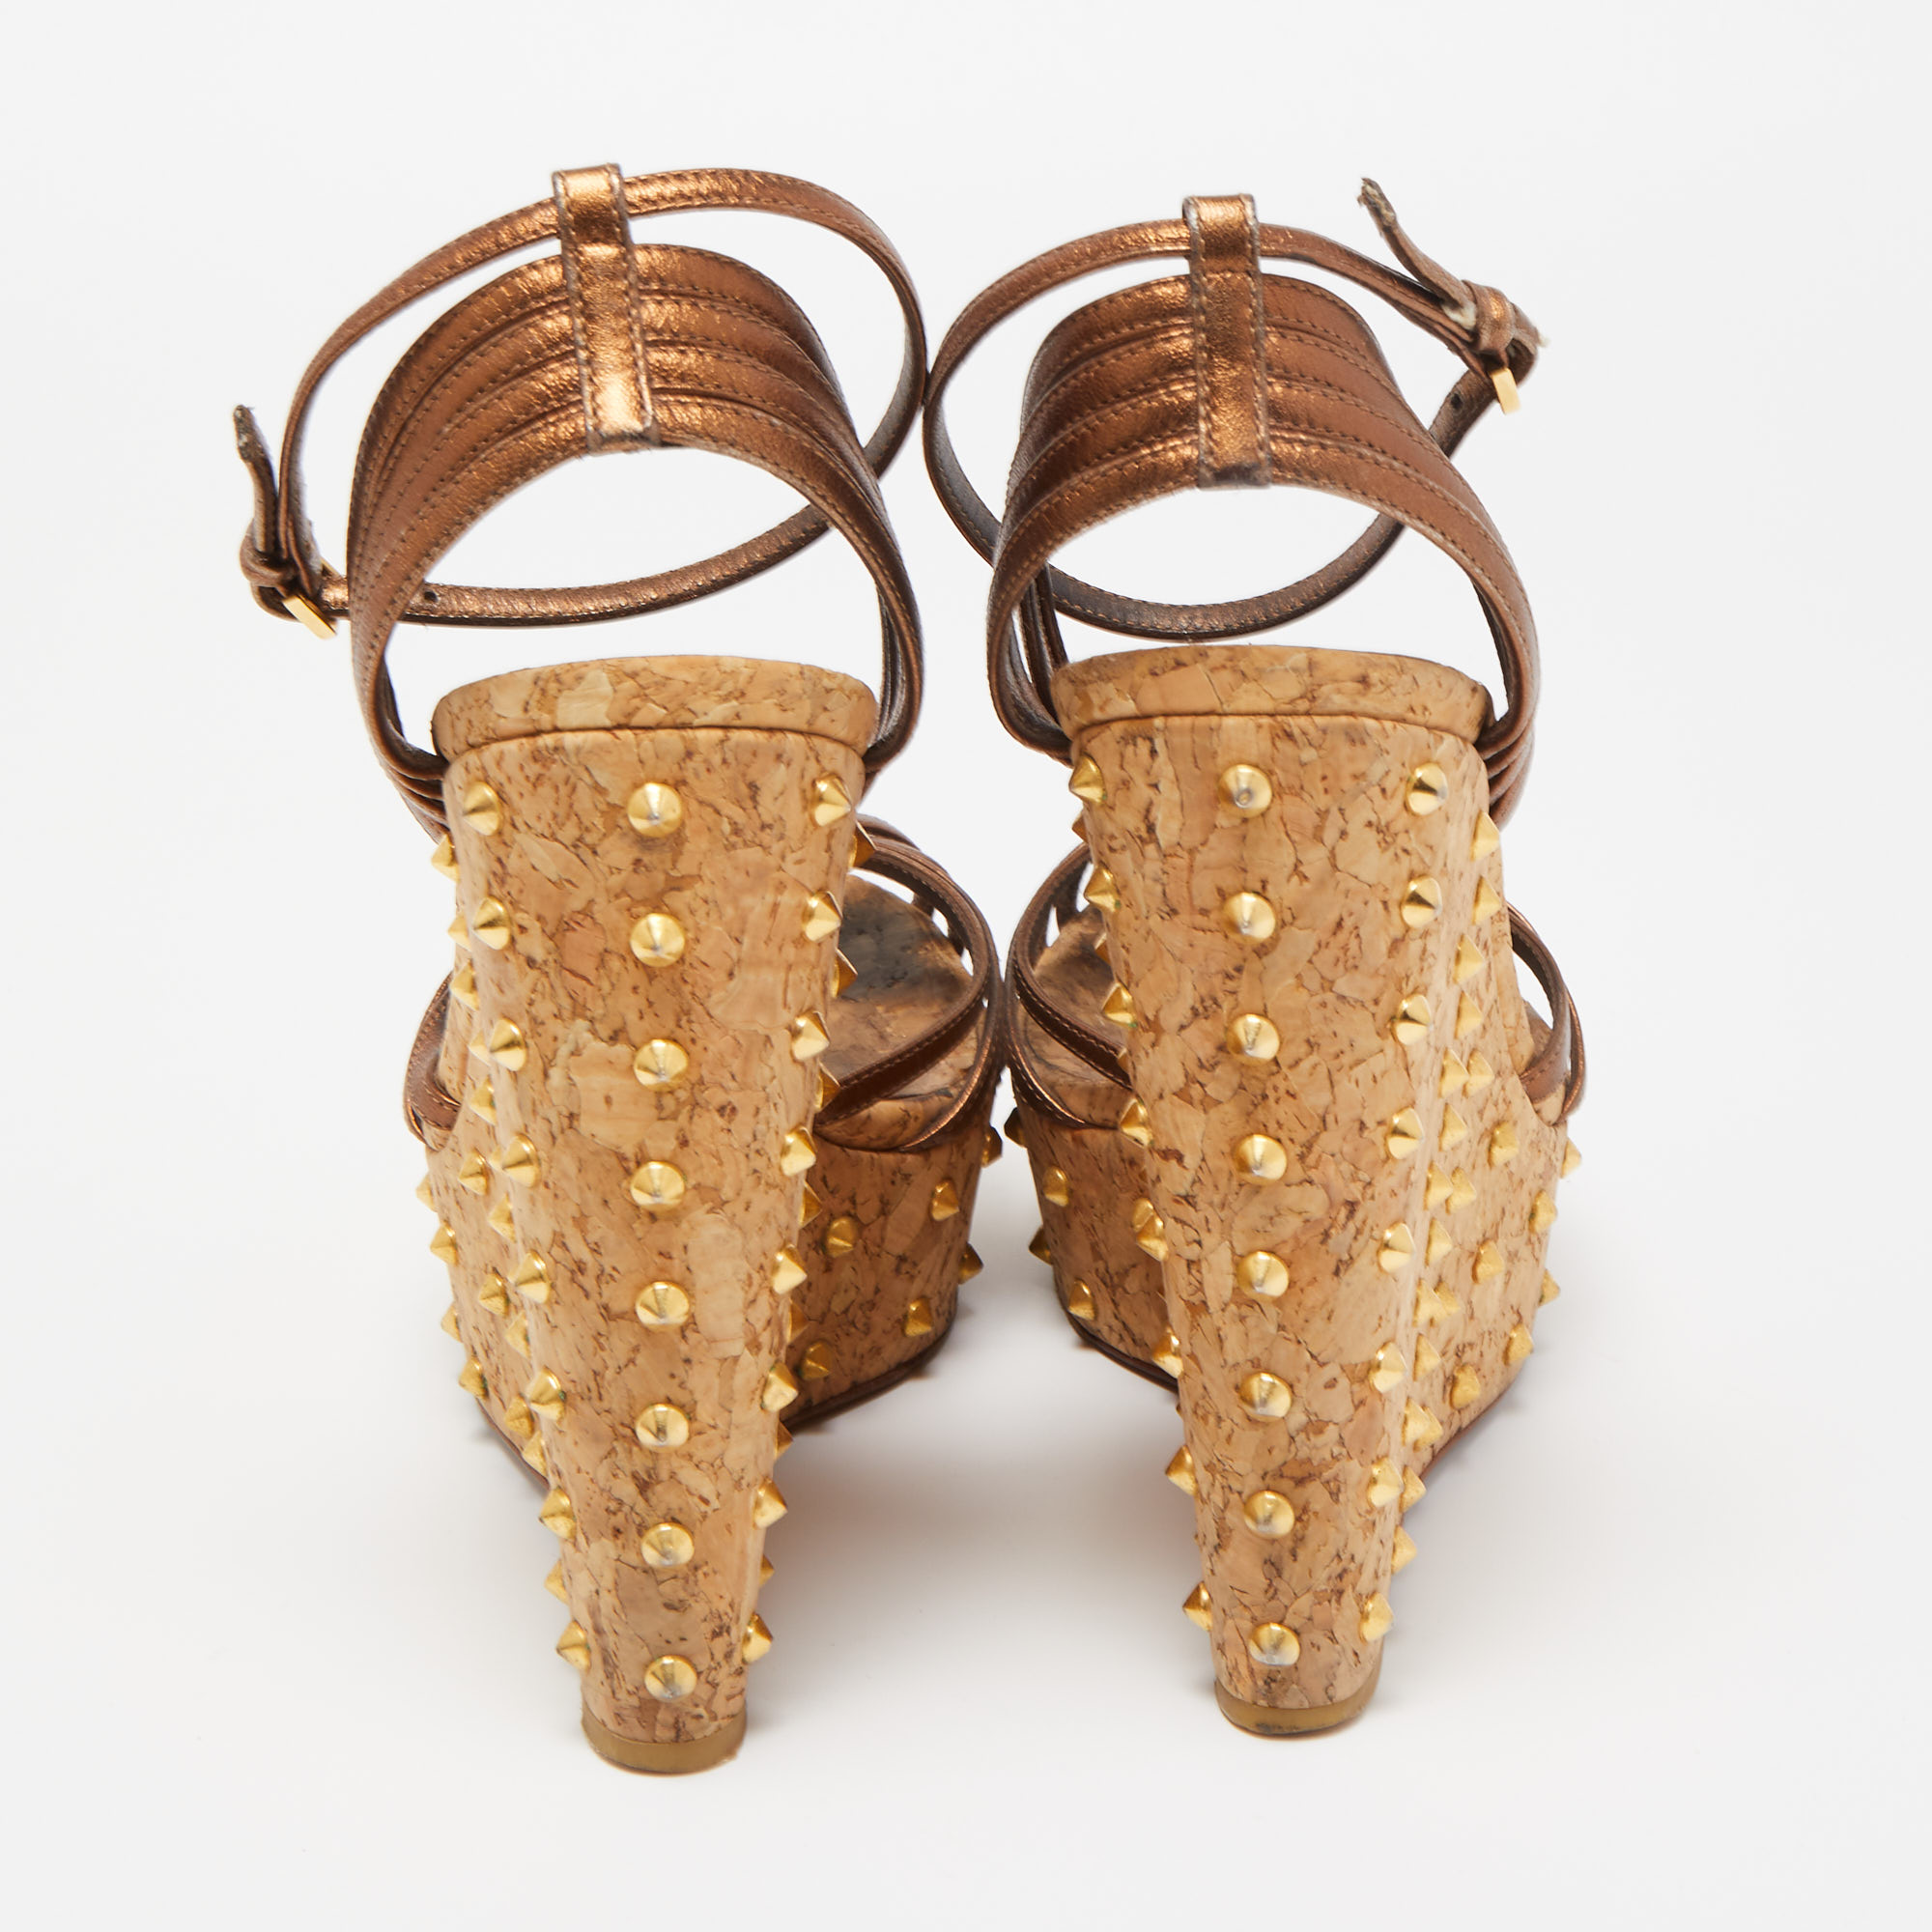 Gucci Metallic Leather Studded Cork Wedge Platform Strappy Sandals Size 38